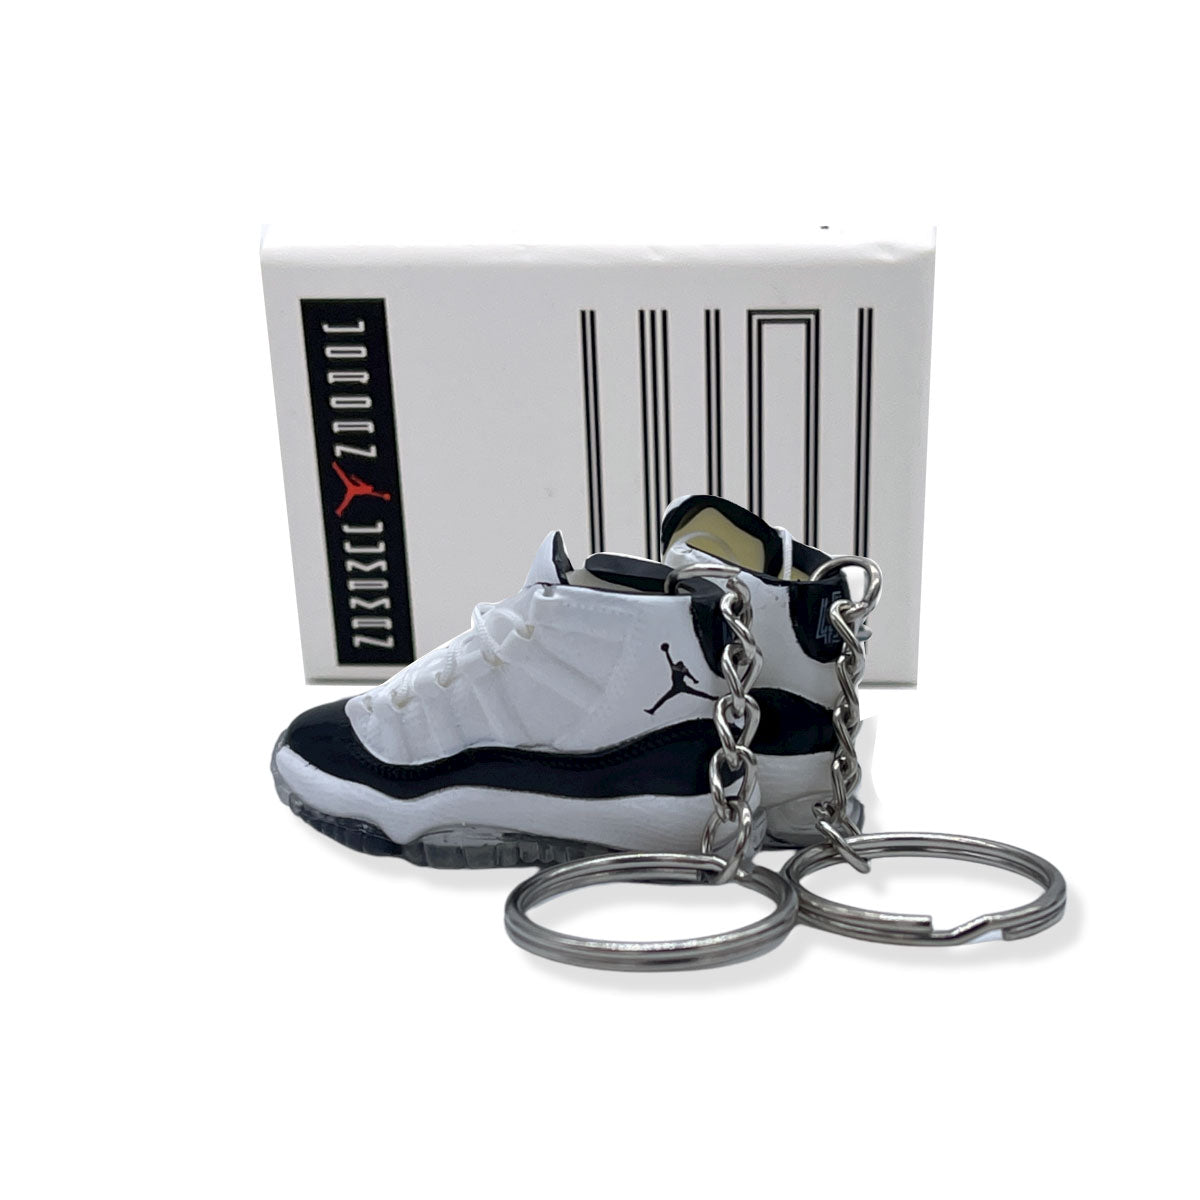 3D Sneaker Keychain- Air Jordan 11 Concord Pair